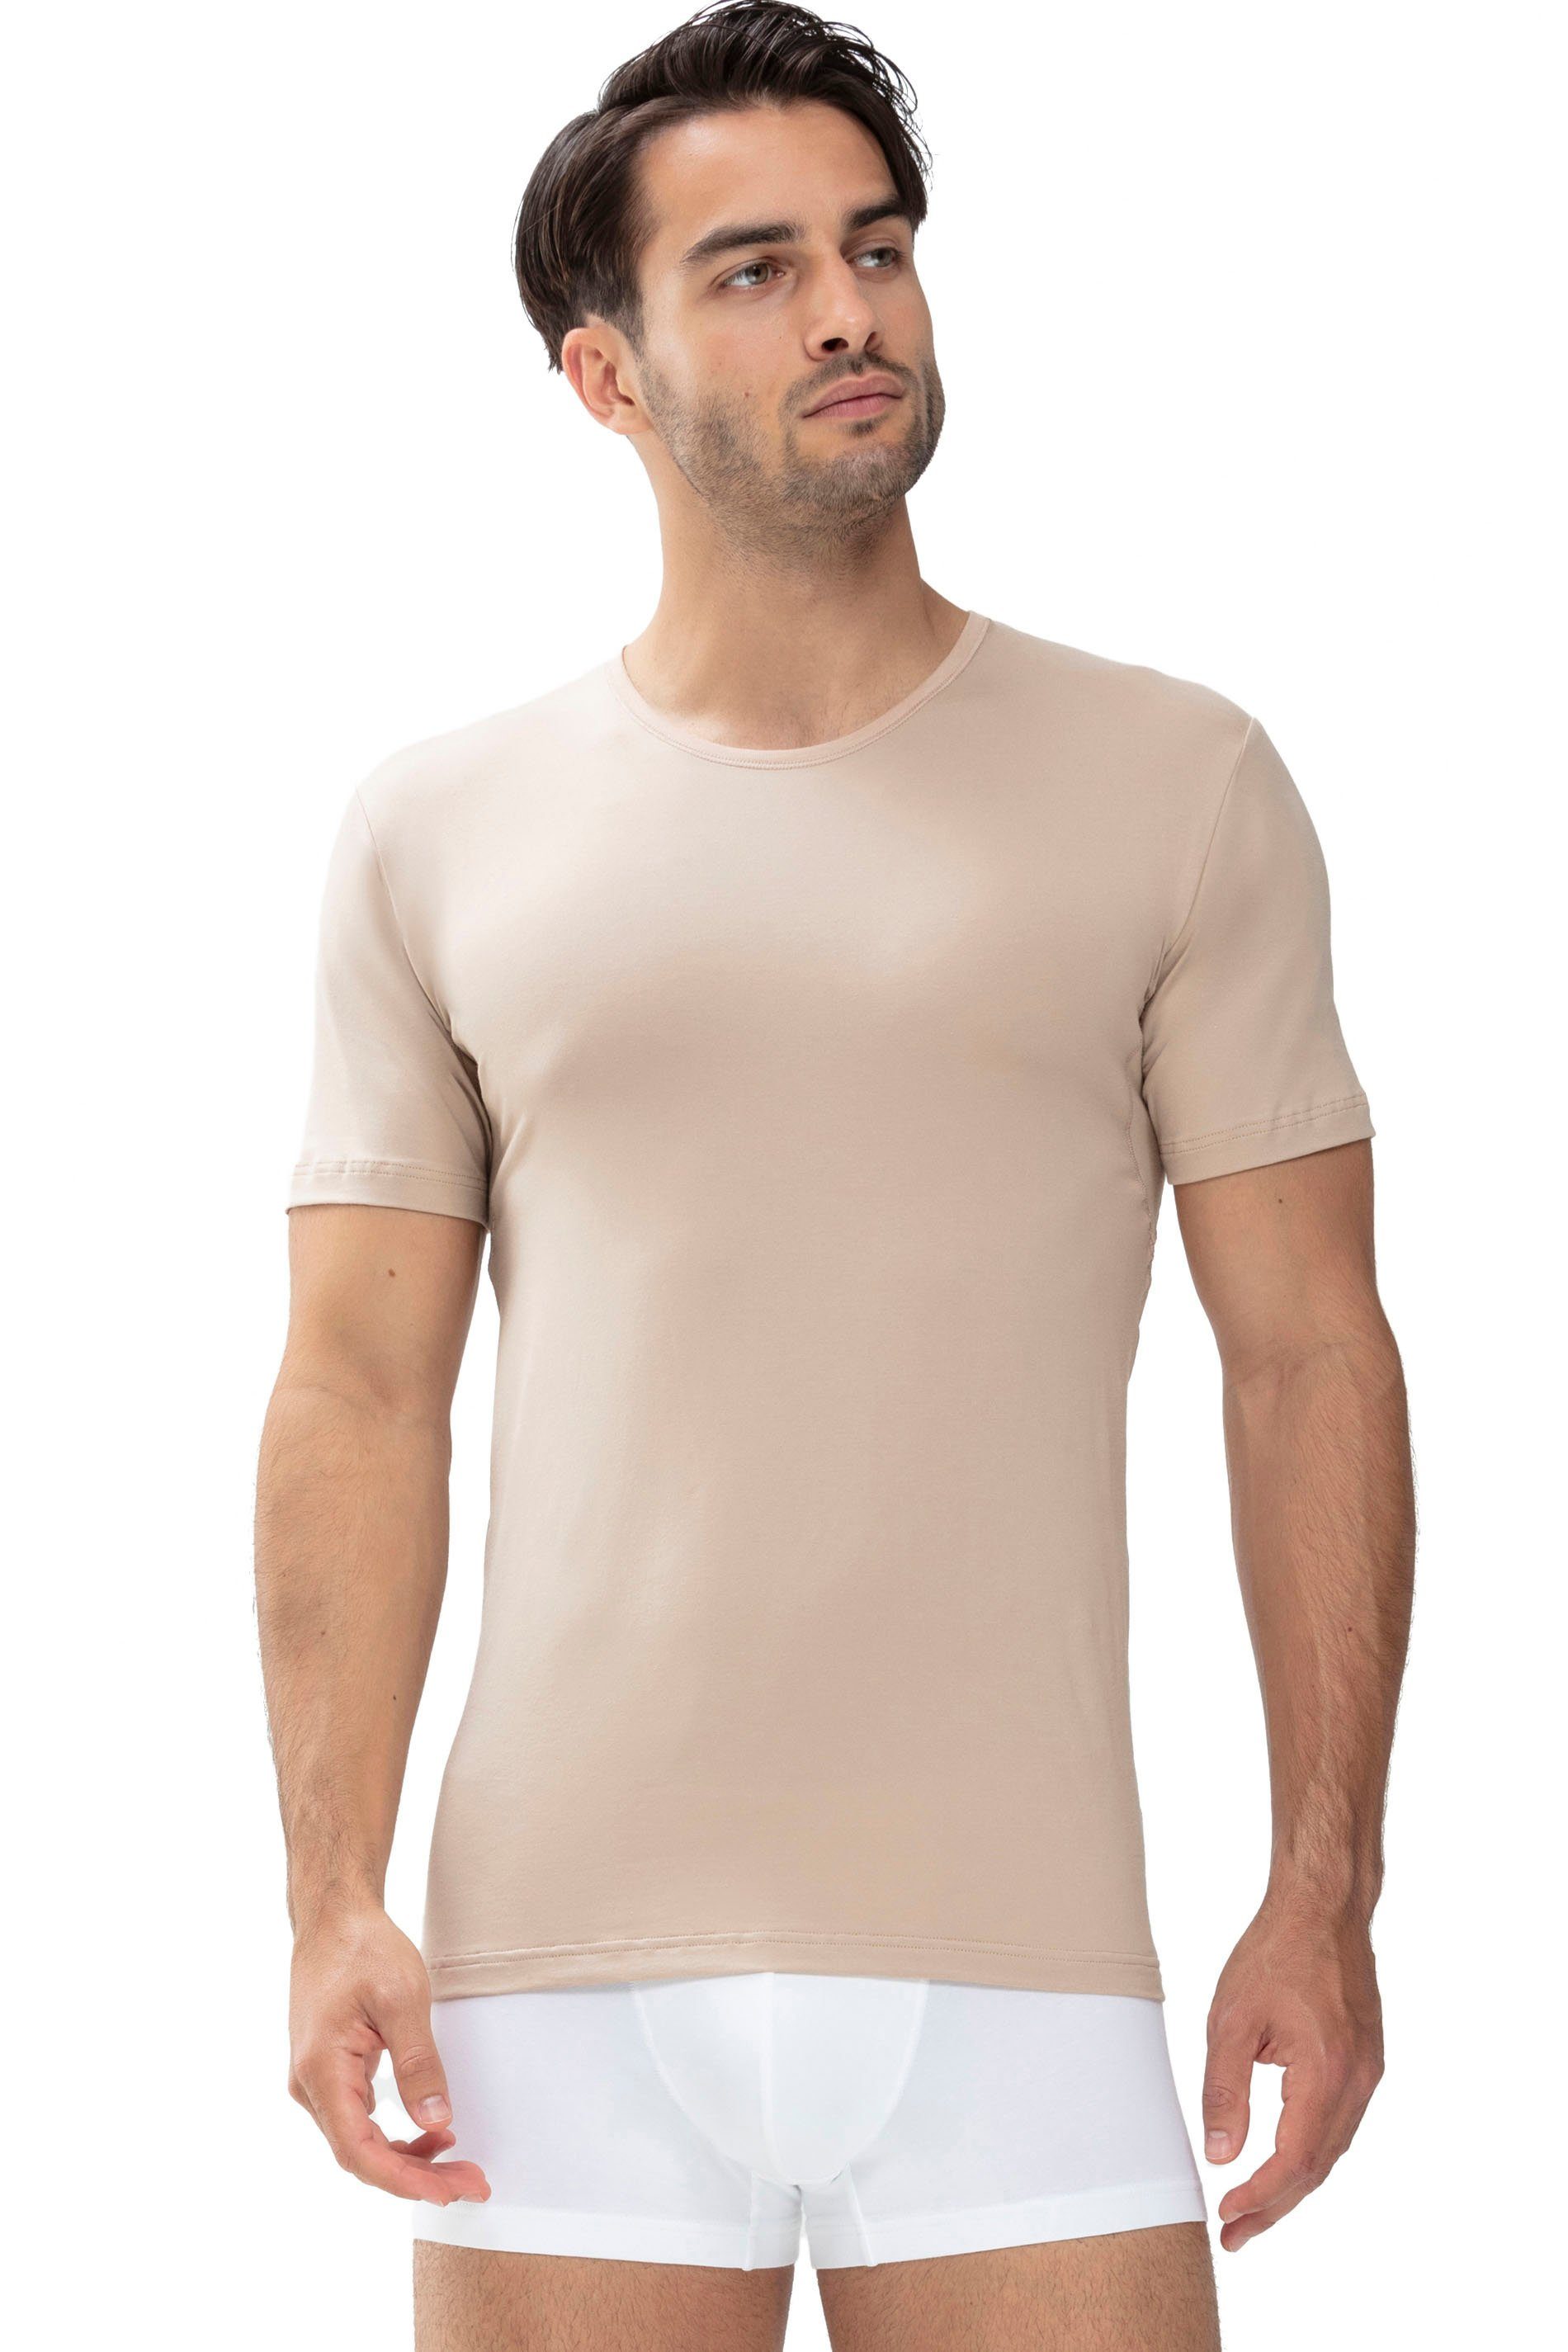 Mey Unterziehshirt Dry Cotton Functional unter dem Businesshemd unsichtbar, Halbarm light skin | Unterhemden